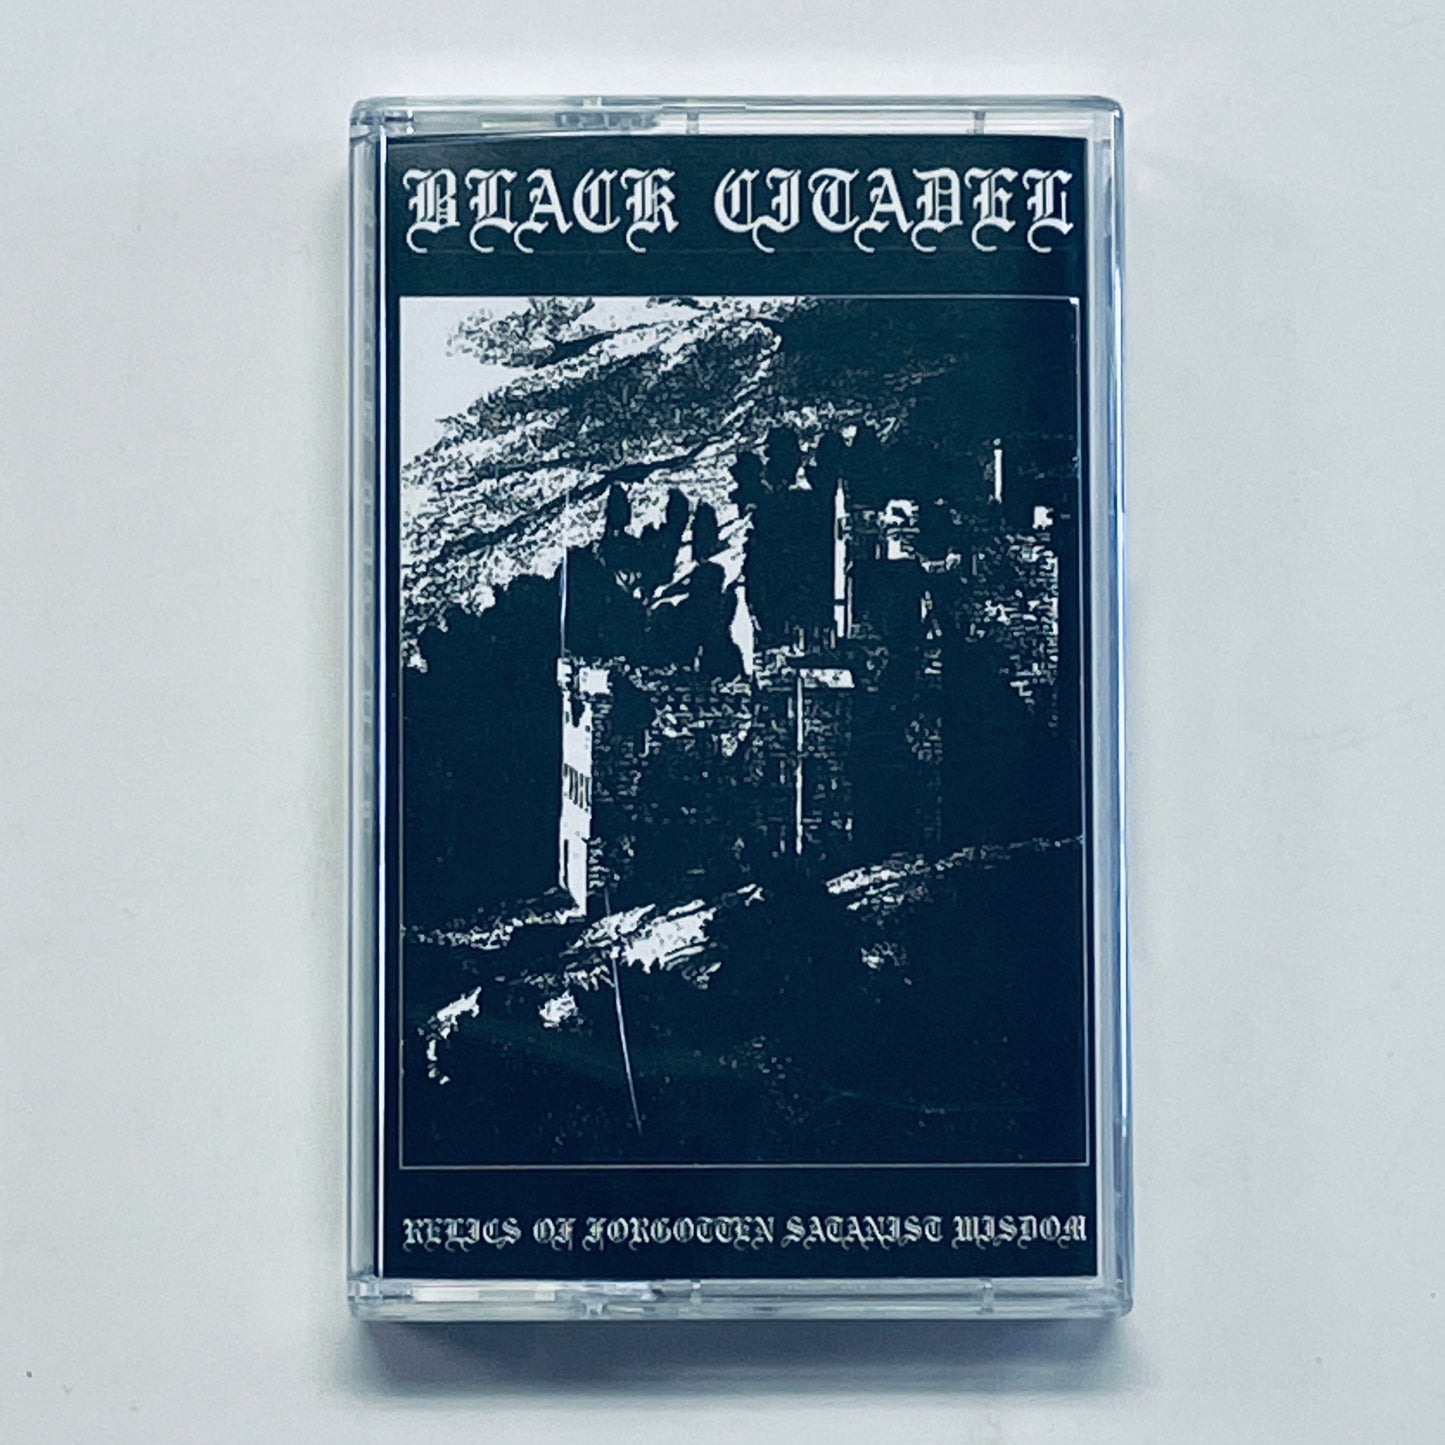 Black Citadel – Relics Of Forgotten Satanist Wisdom cassette tape (used)